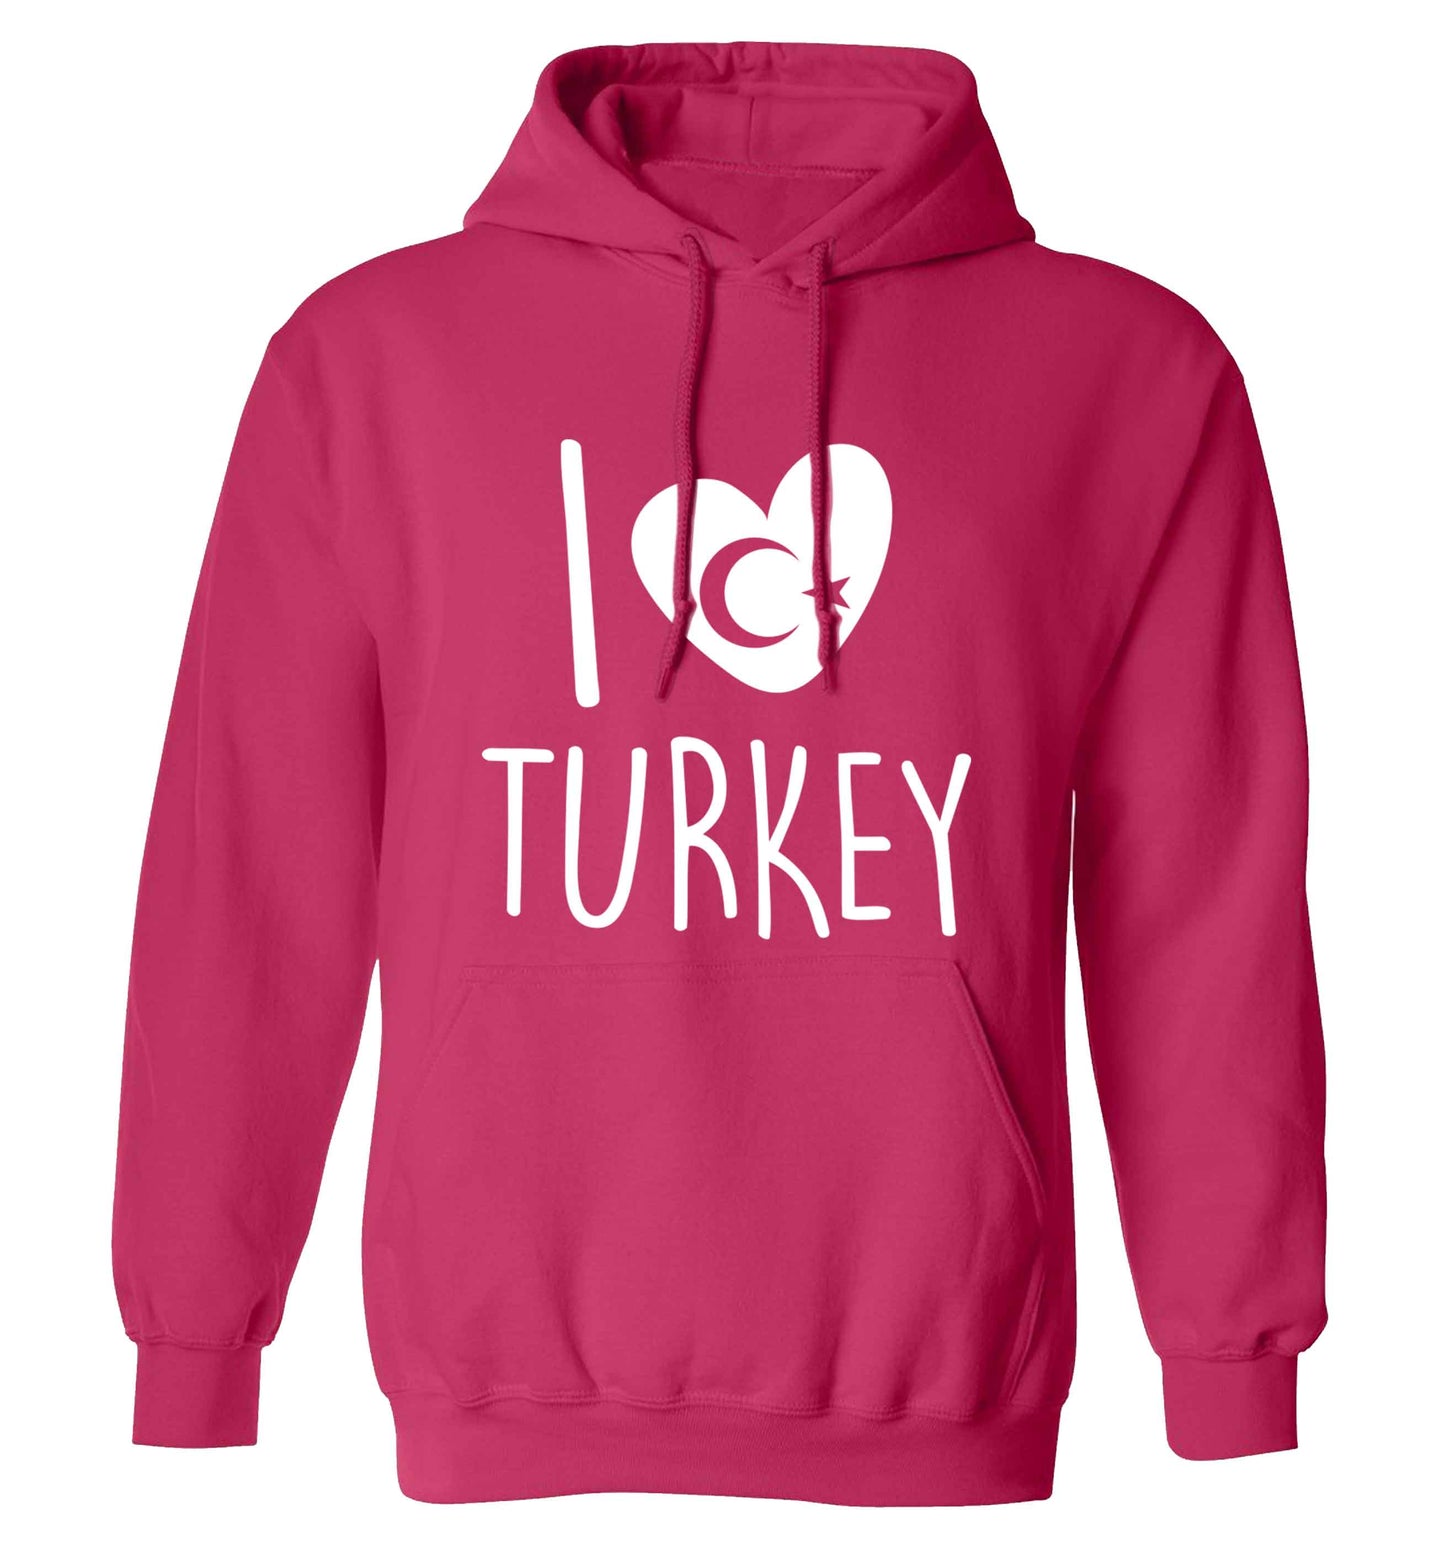 I love Turkey adults unisex pink hoodie 2XL